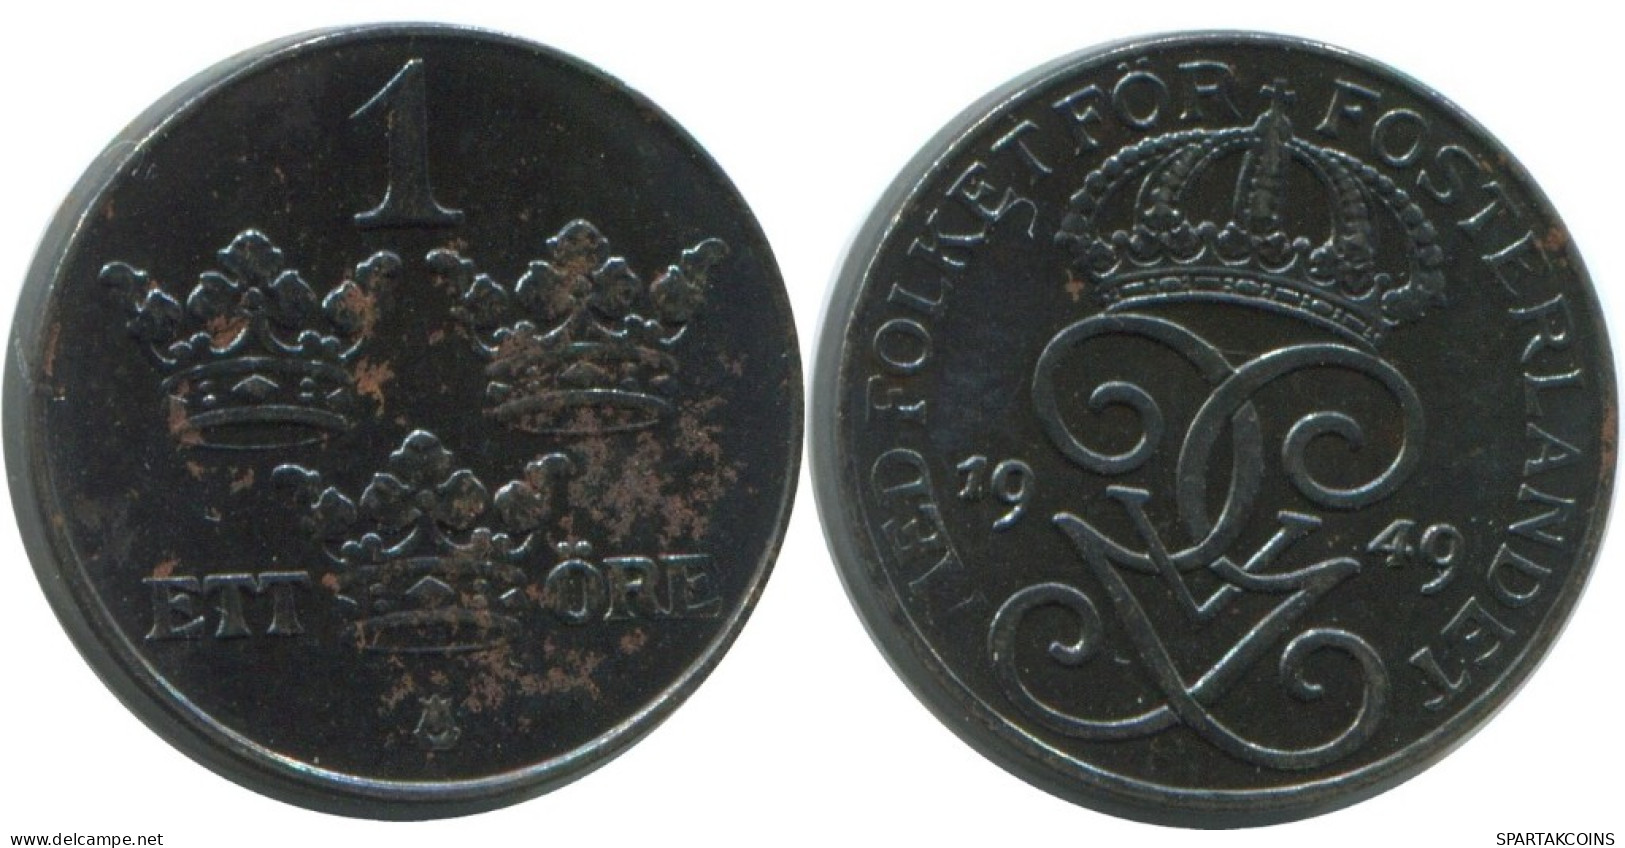 1 ORE 1949 SWEDEN Coin #AD393.2.U.A - Suède